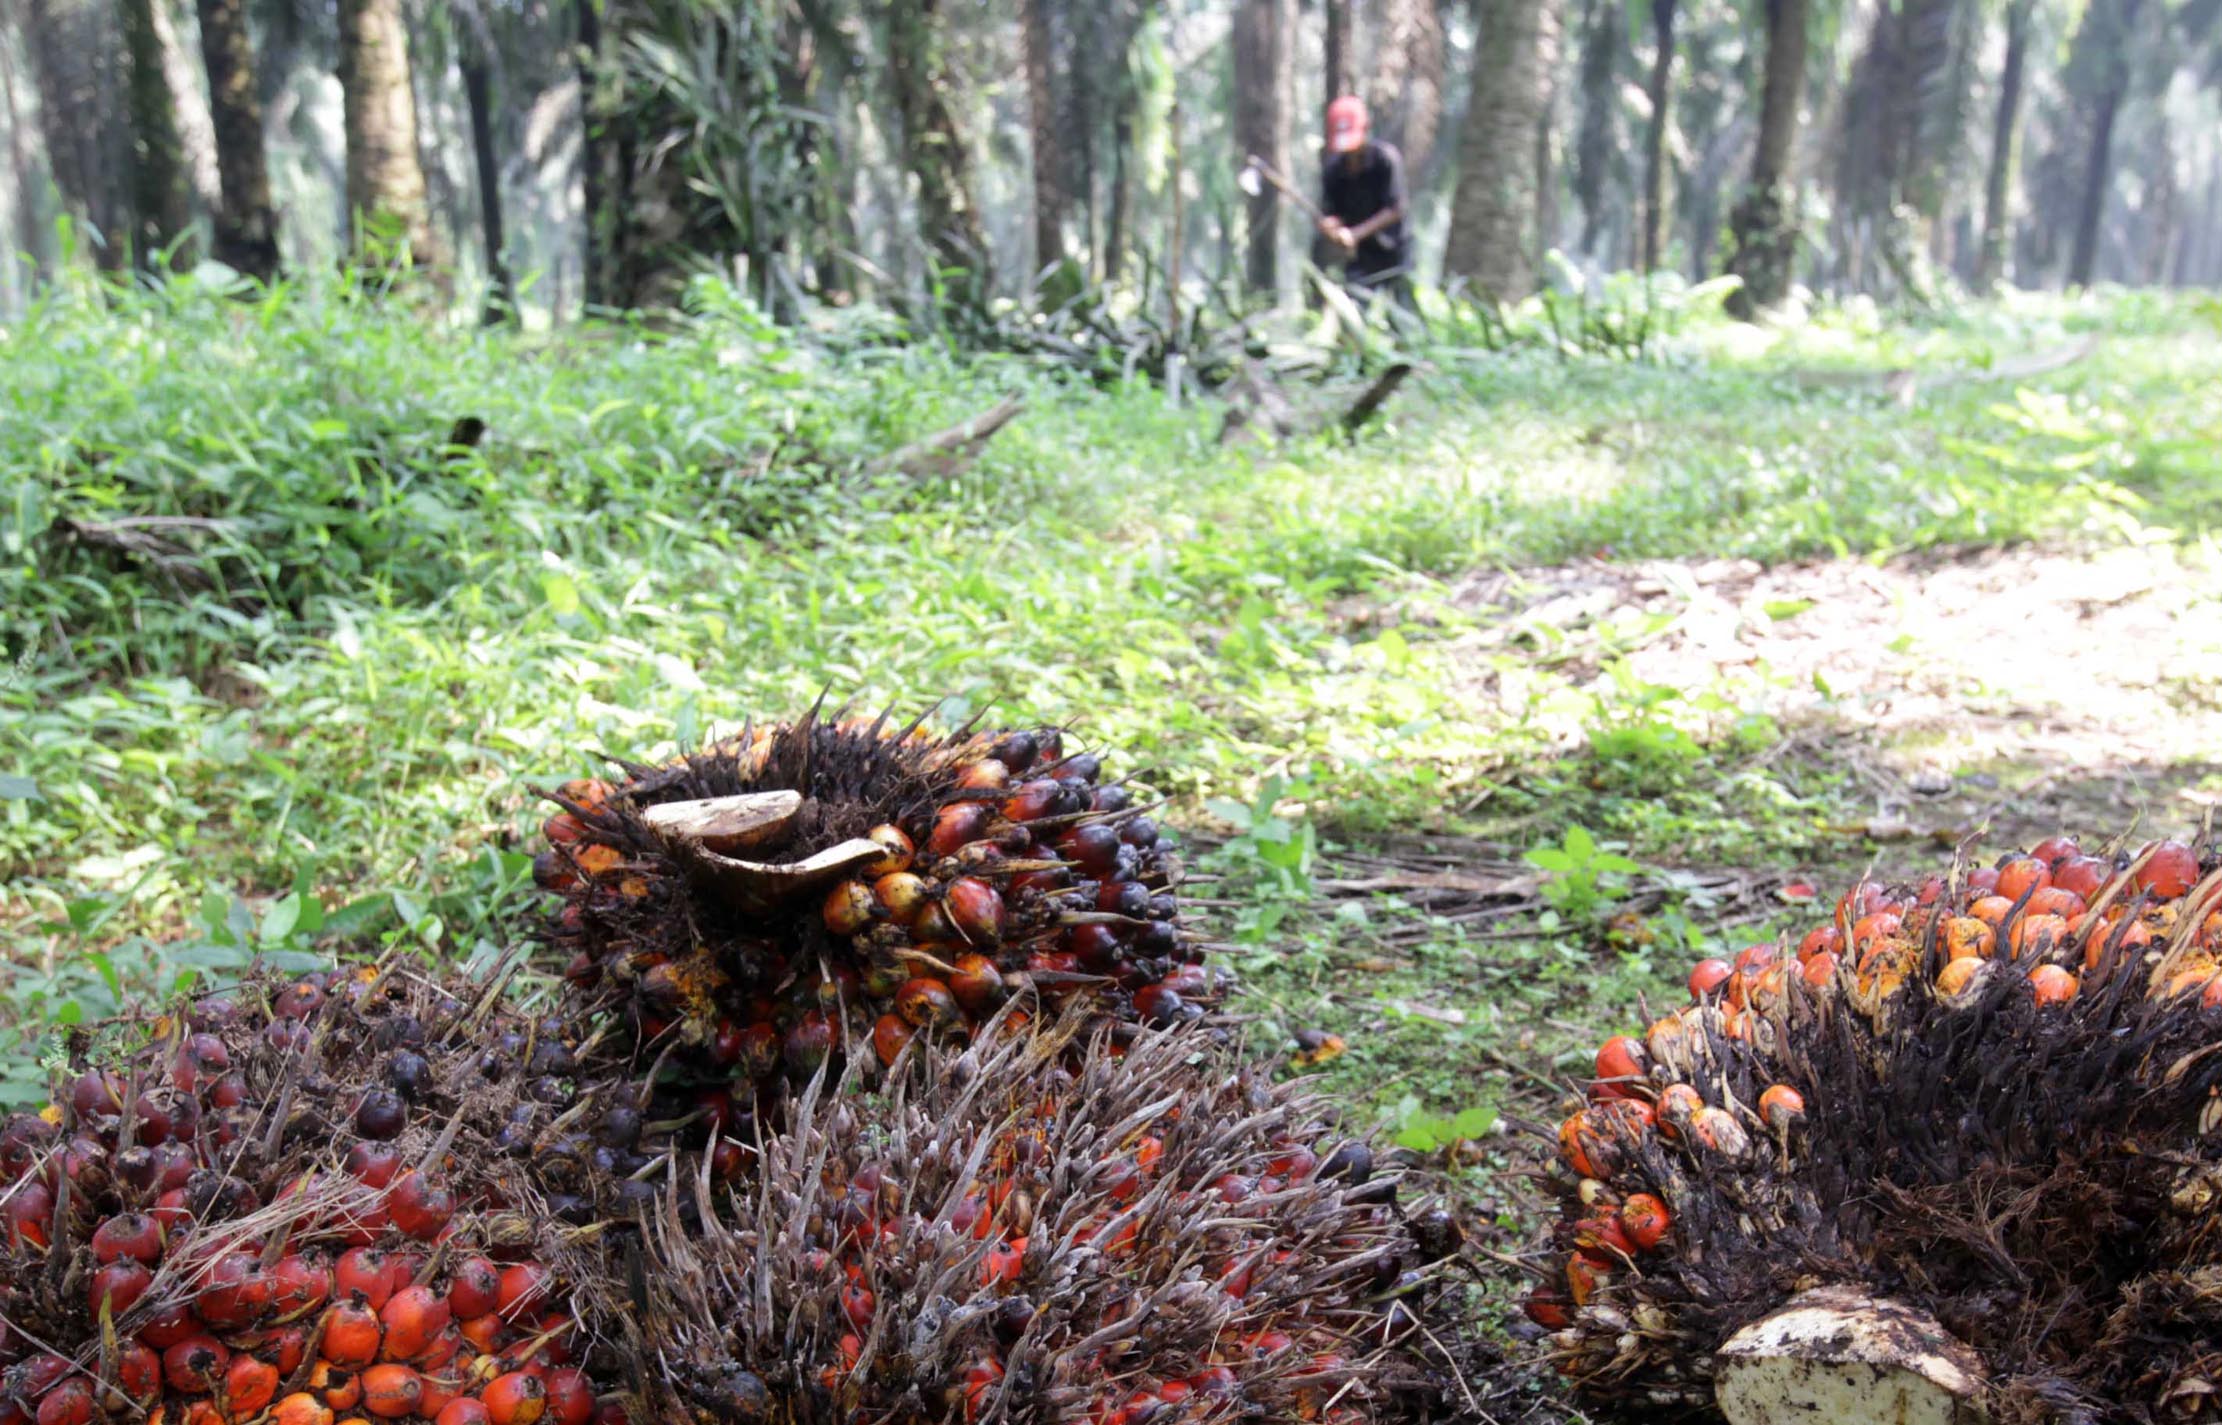 Nampak seorang petani tengah melakukan panen tanaman kelapa sawit di kawasan Bogor Jawa Barat, Kamis 28 Mei 2021. Foto : Panji Asmoro/TrenAsia